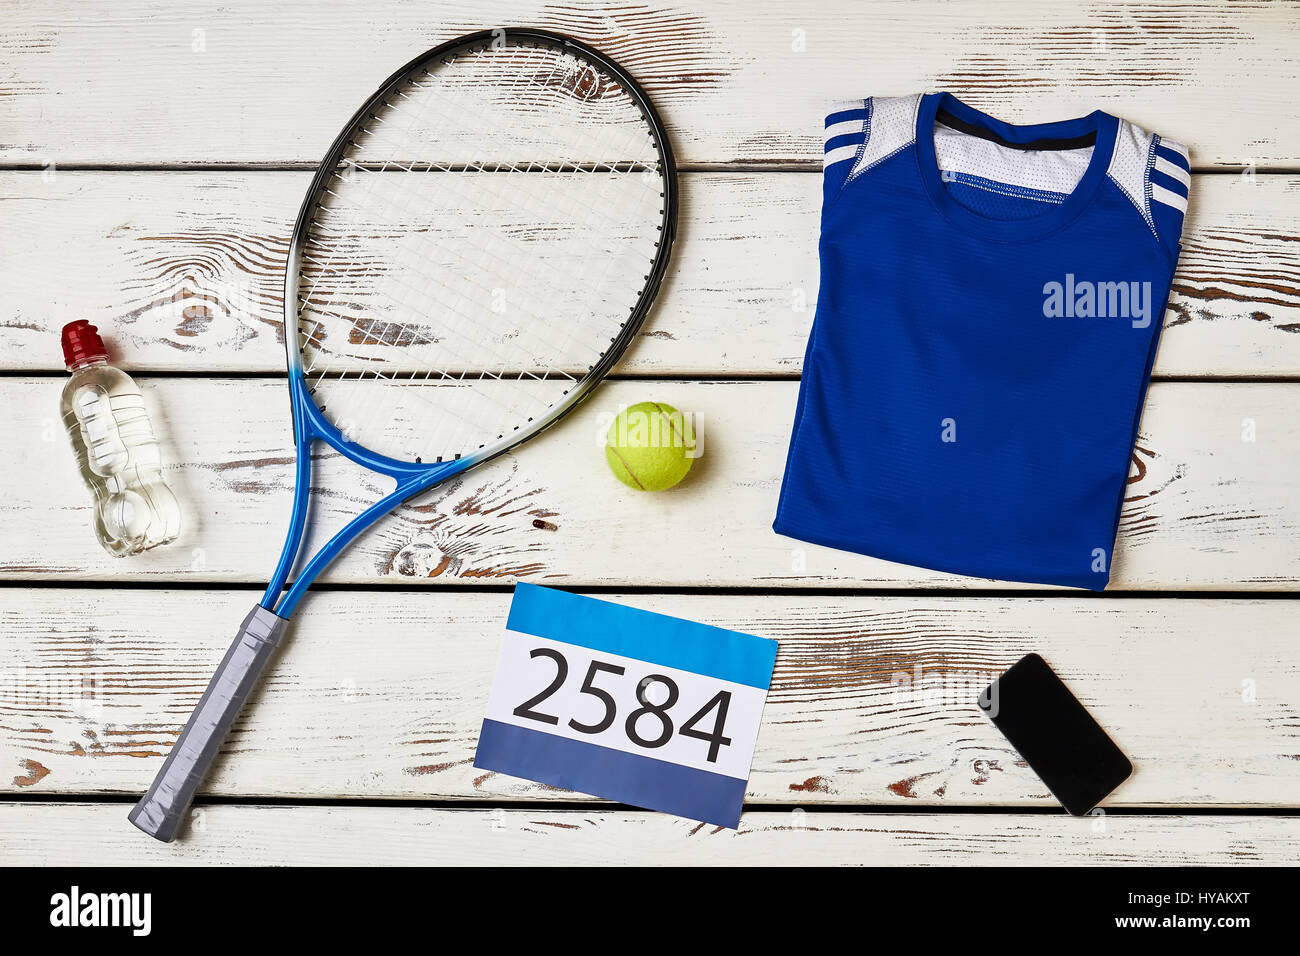 Racket, phone and T-shirt. Stock Photo